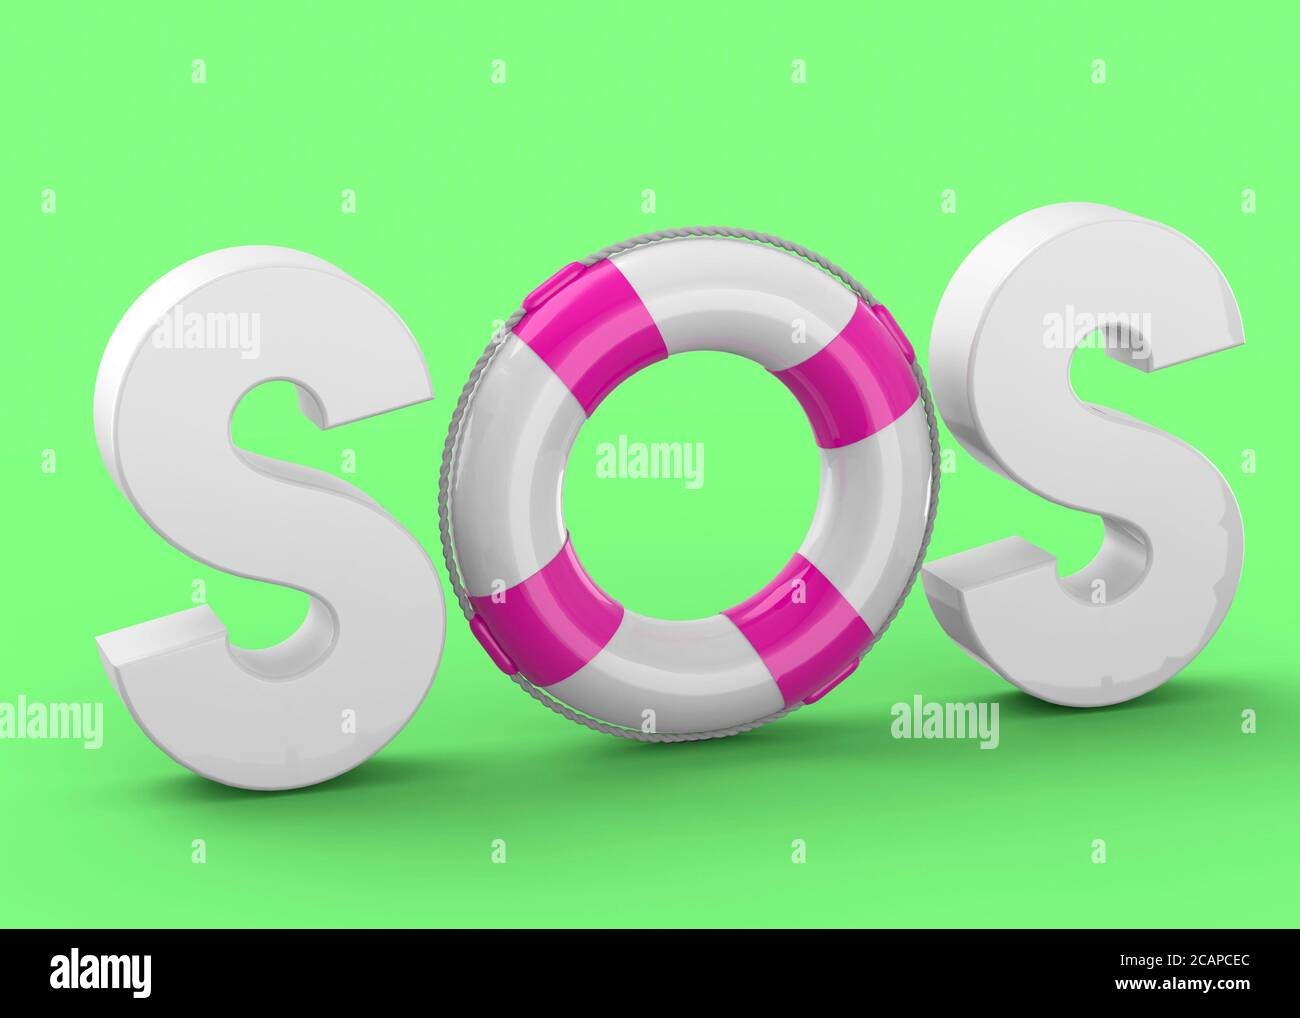 SOS and Life Buoy - 3D Stock Photo